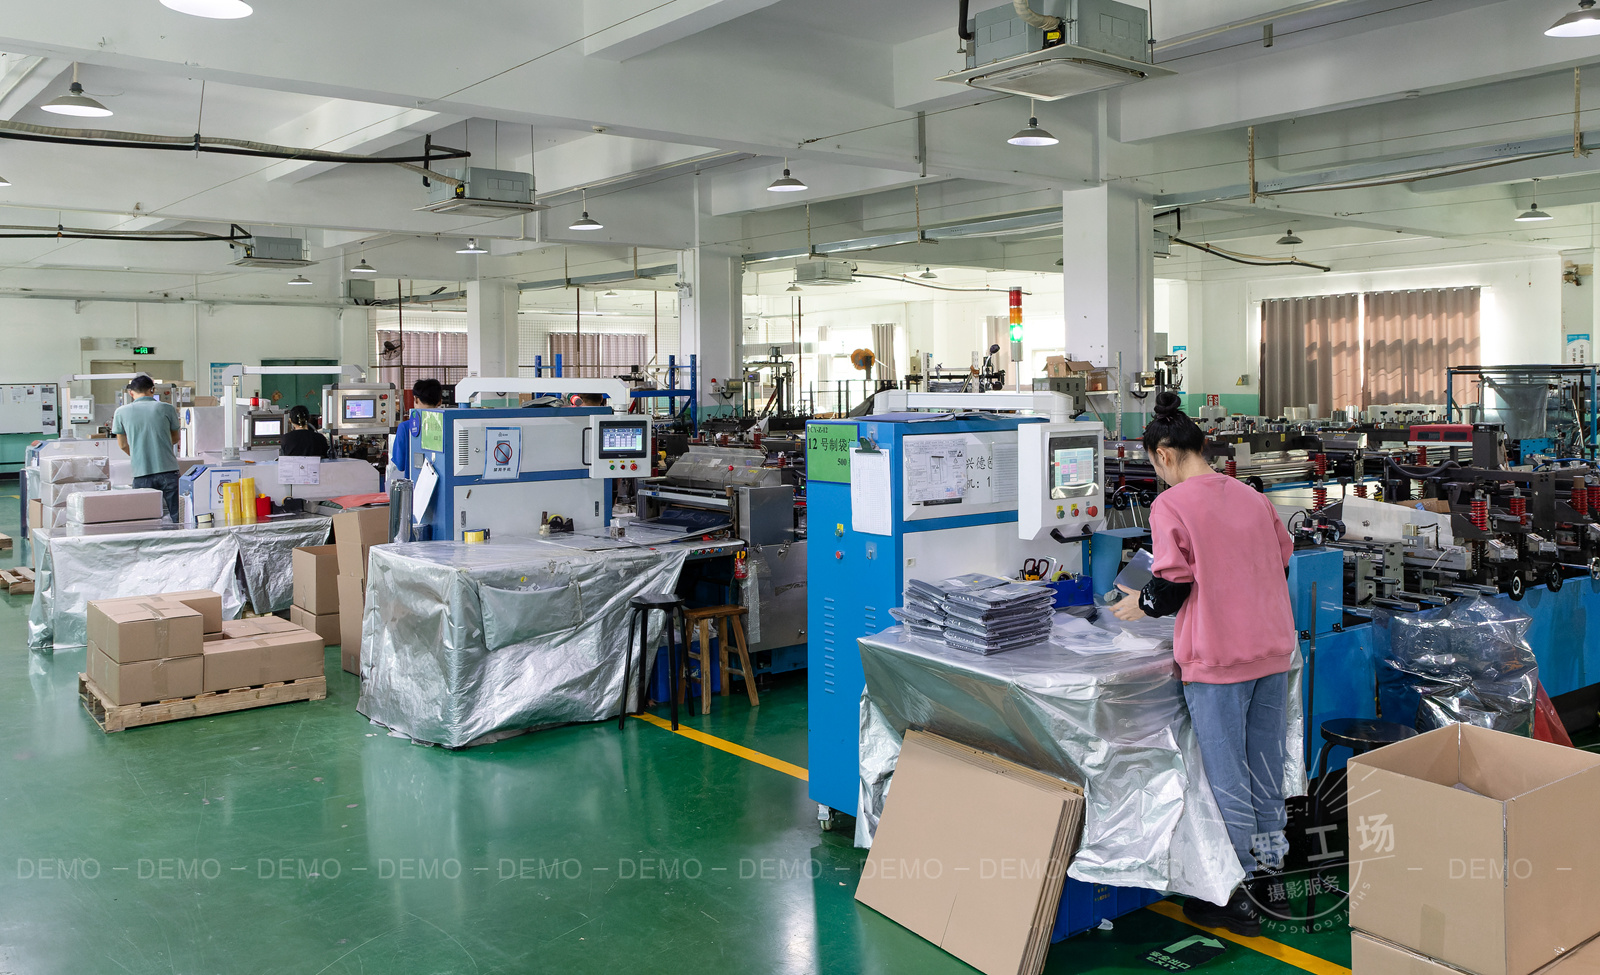 Factory environment13